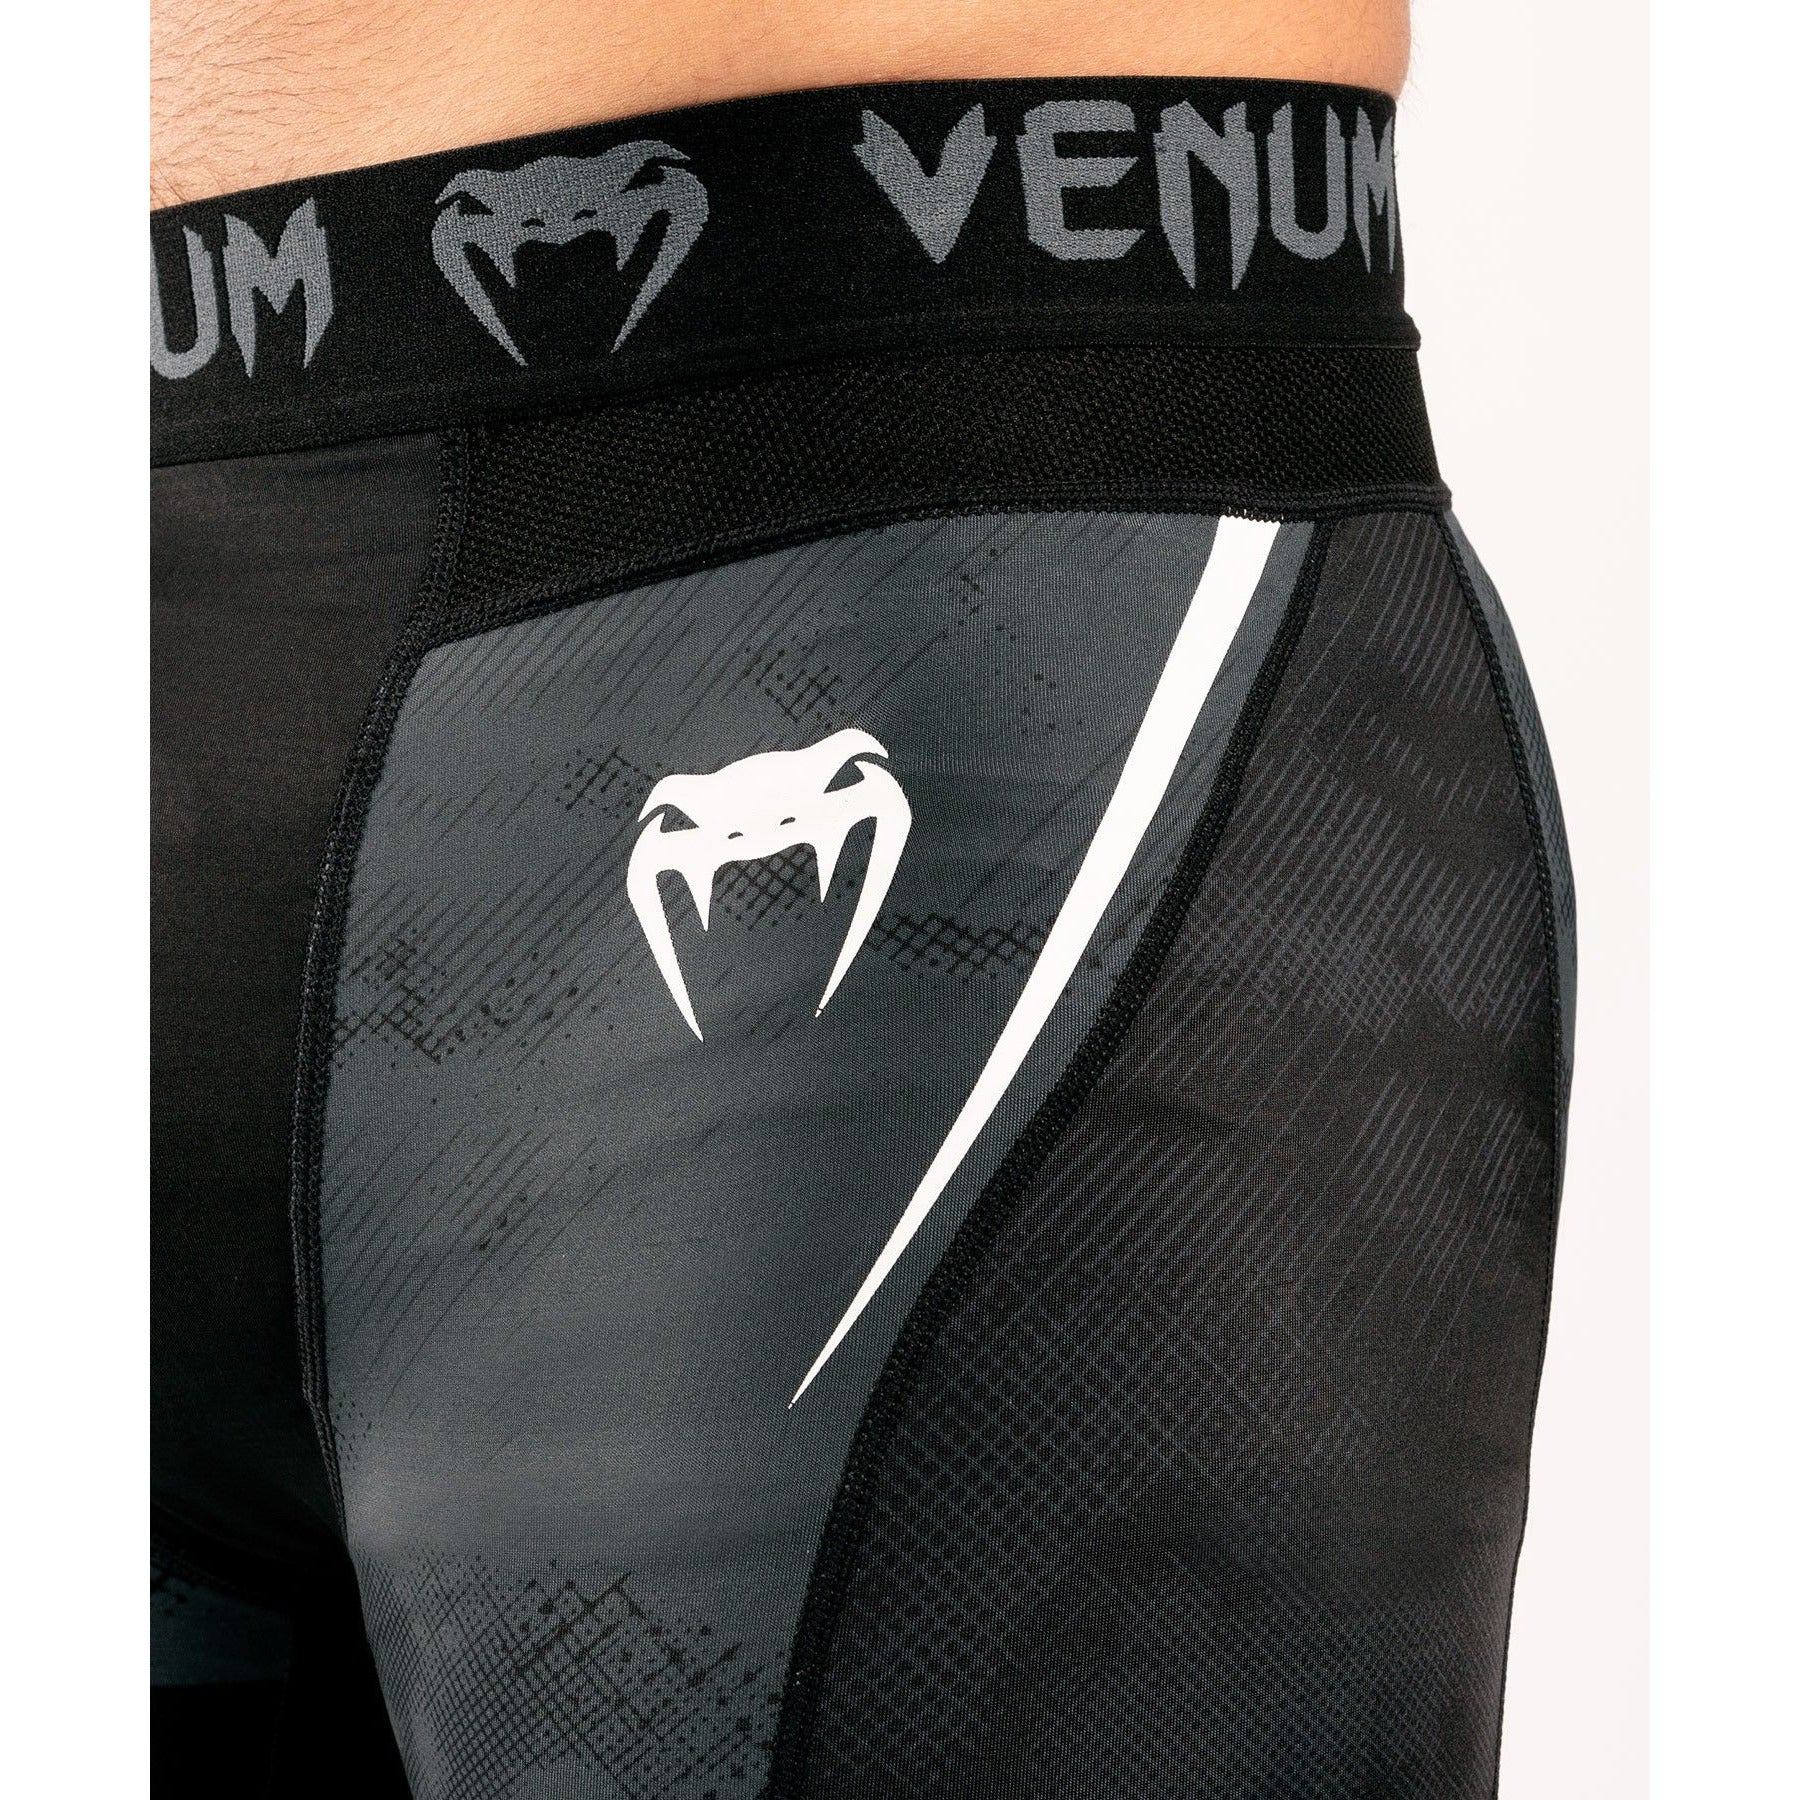 Venum Compression Shorts - MASA